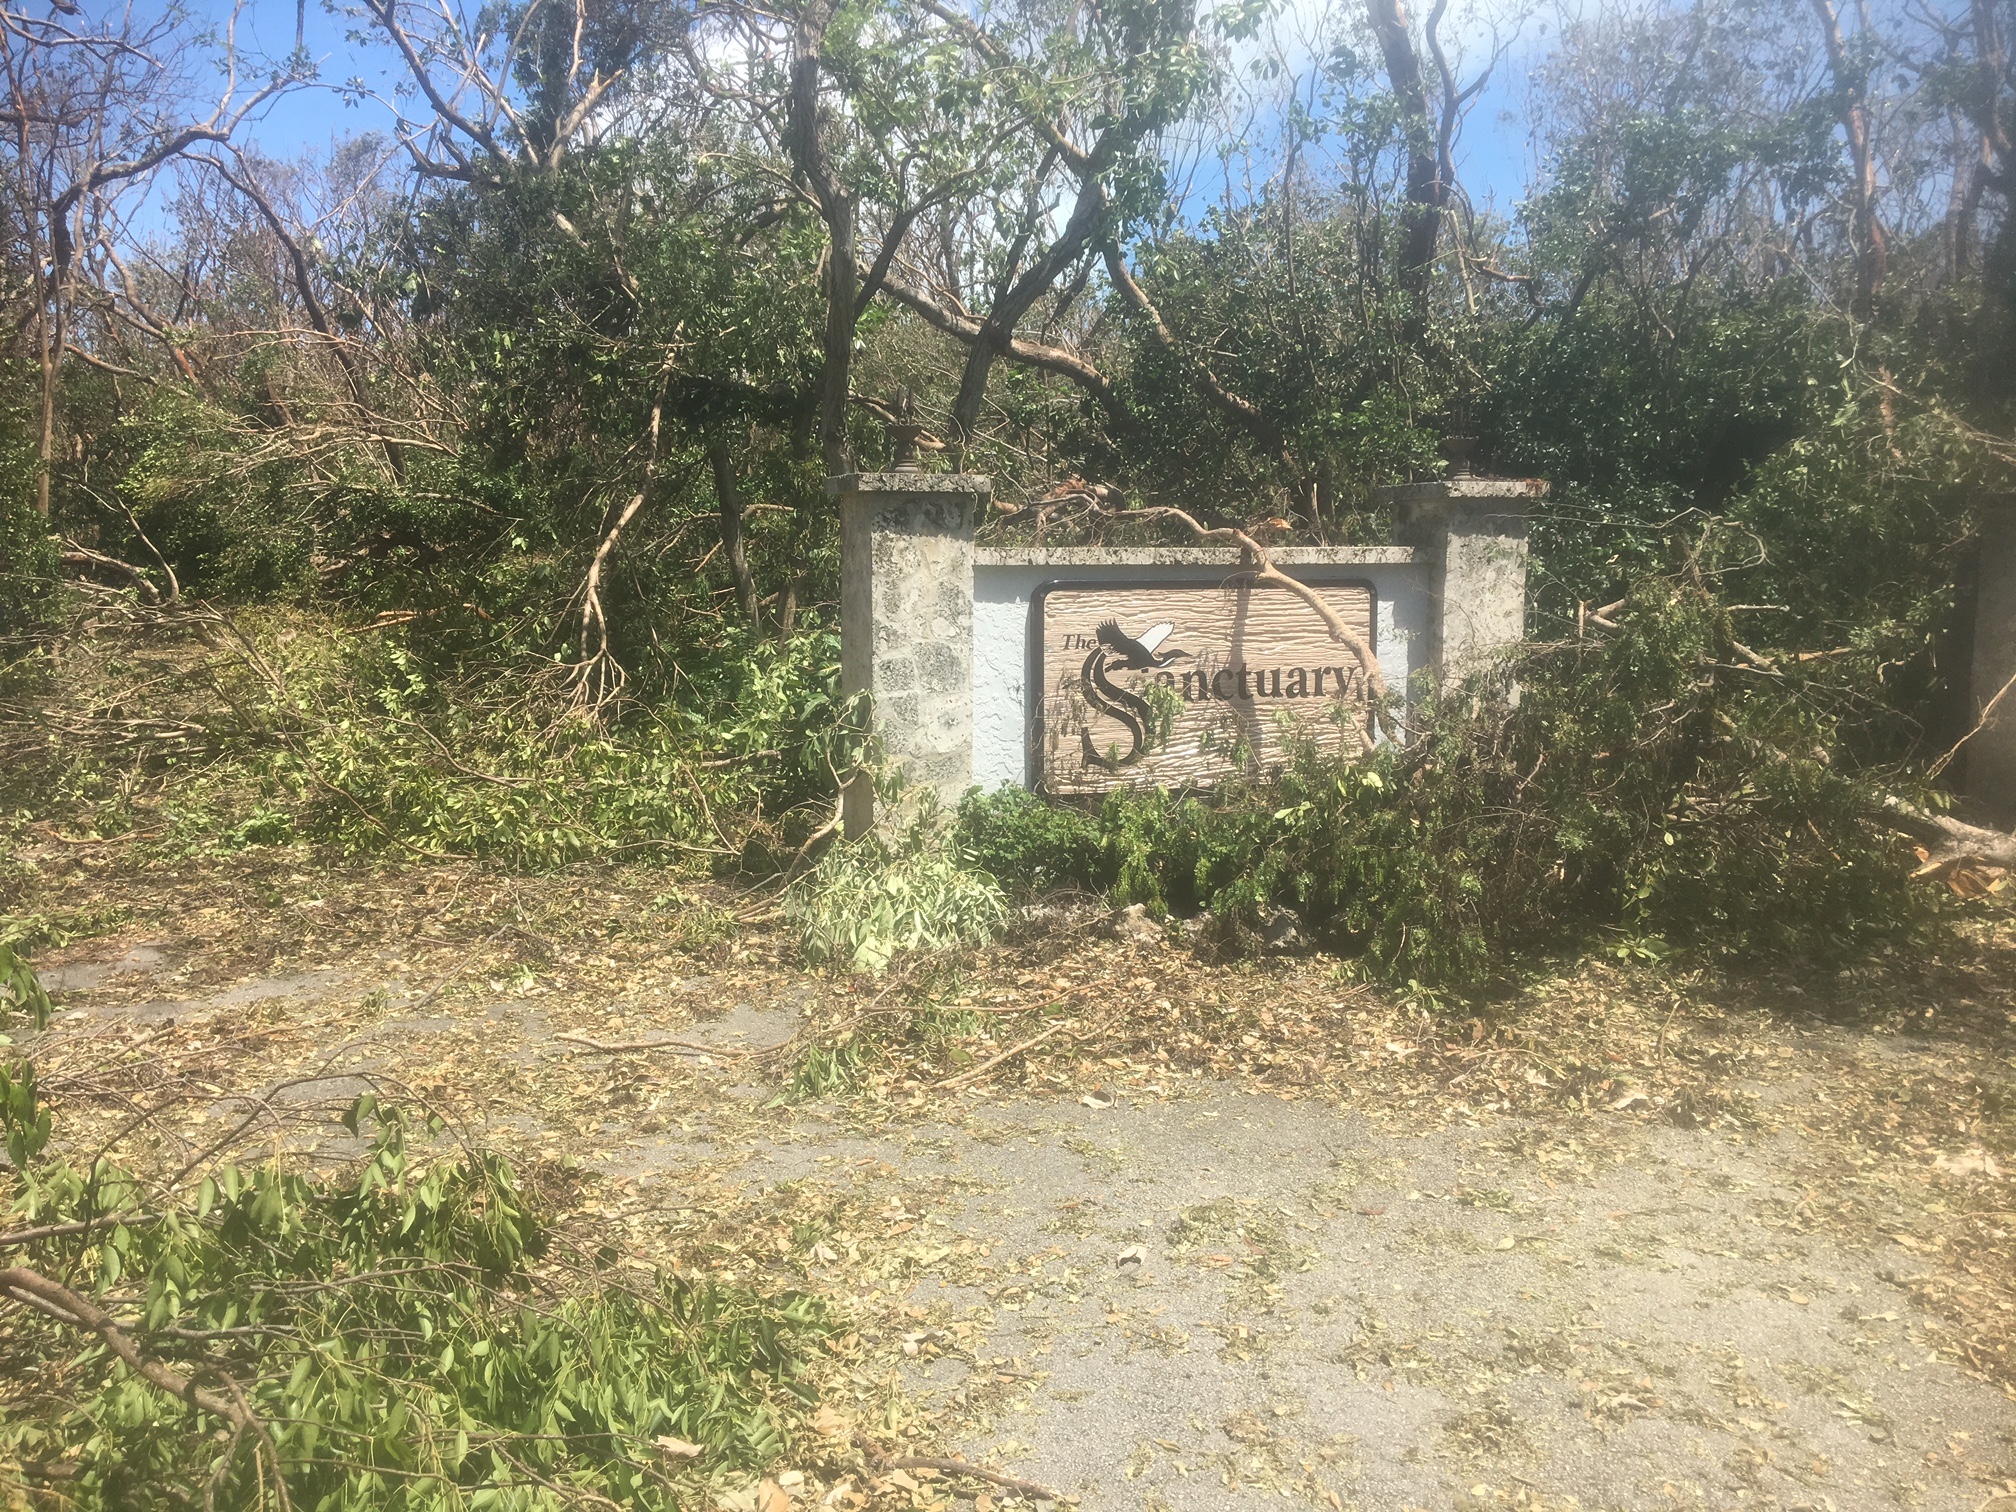 Sanctuary's hurricane damage